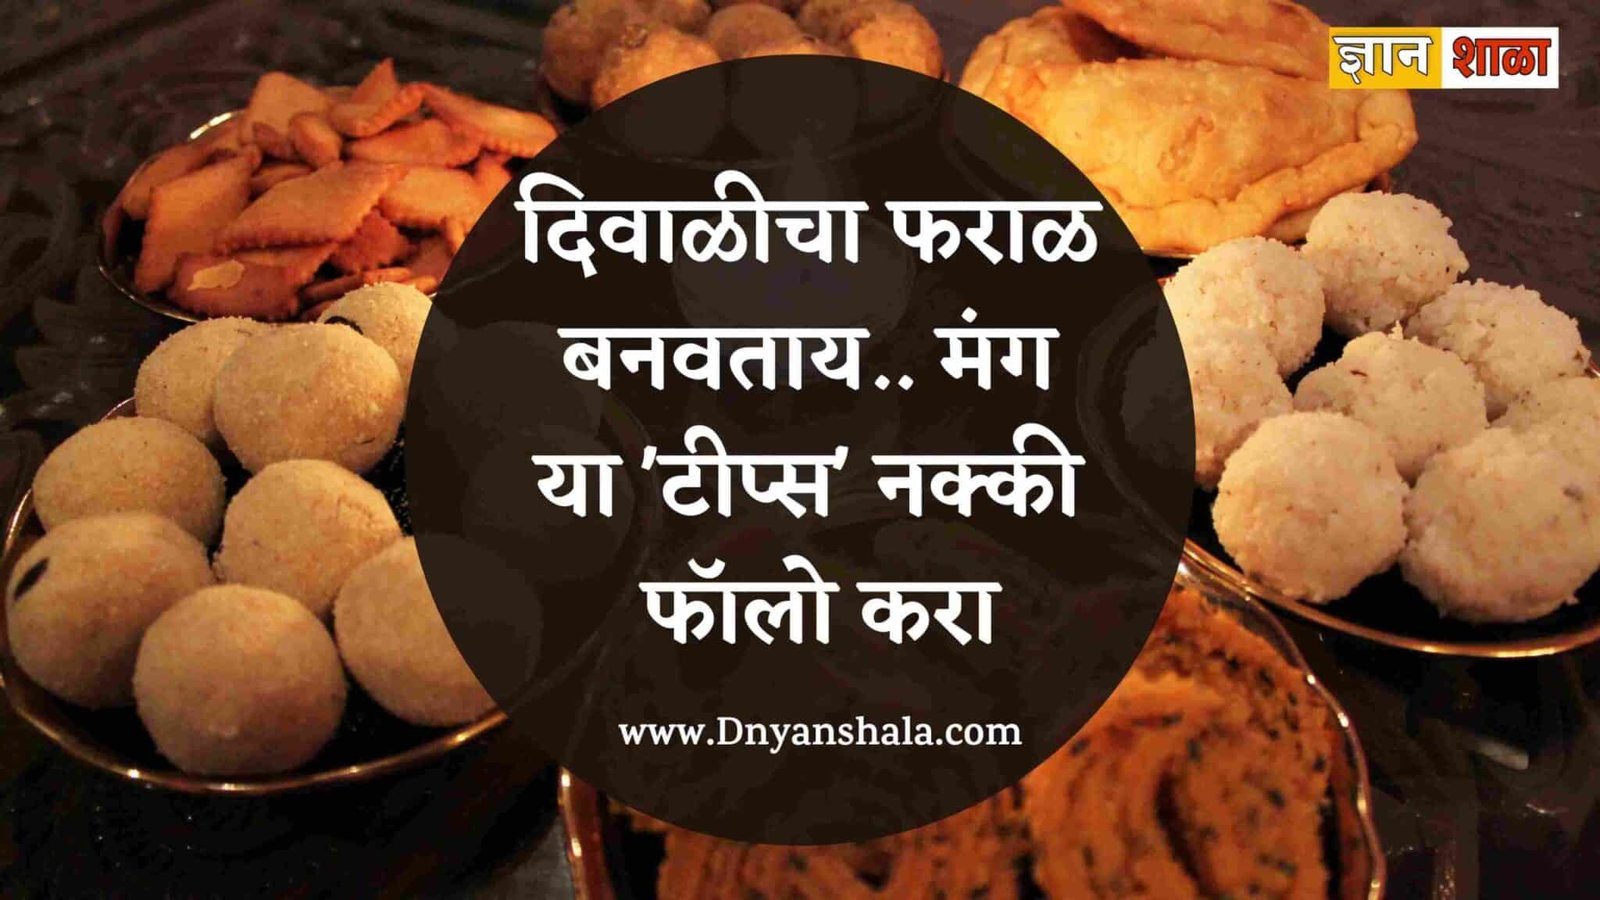 Diwali faral preparation tips in marathi